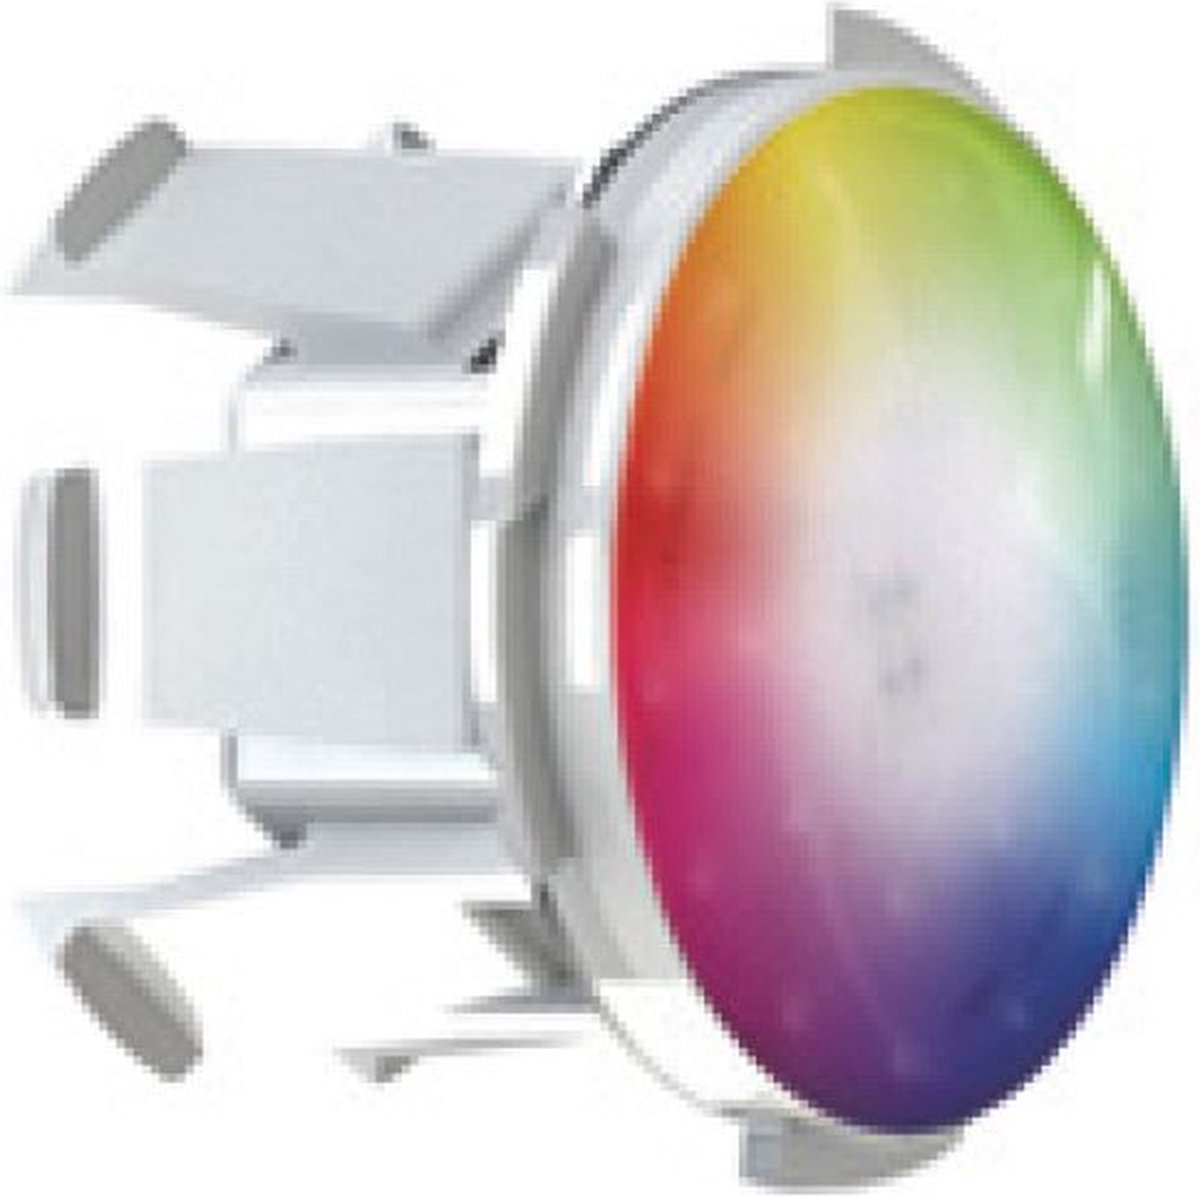 Adagio Pro PLP050-RGB kleur 10W 400lm